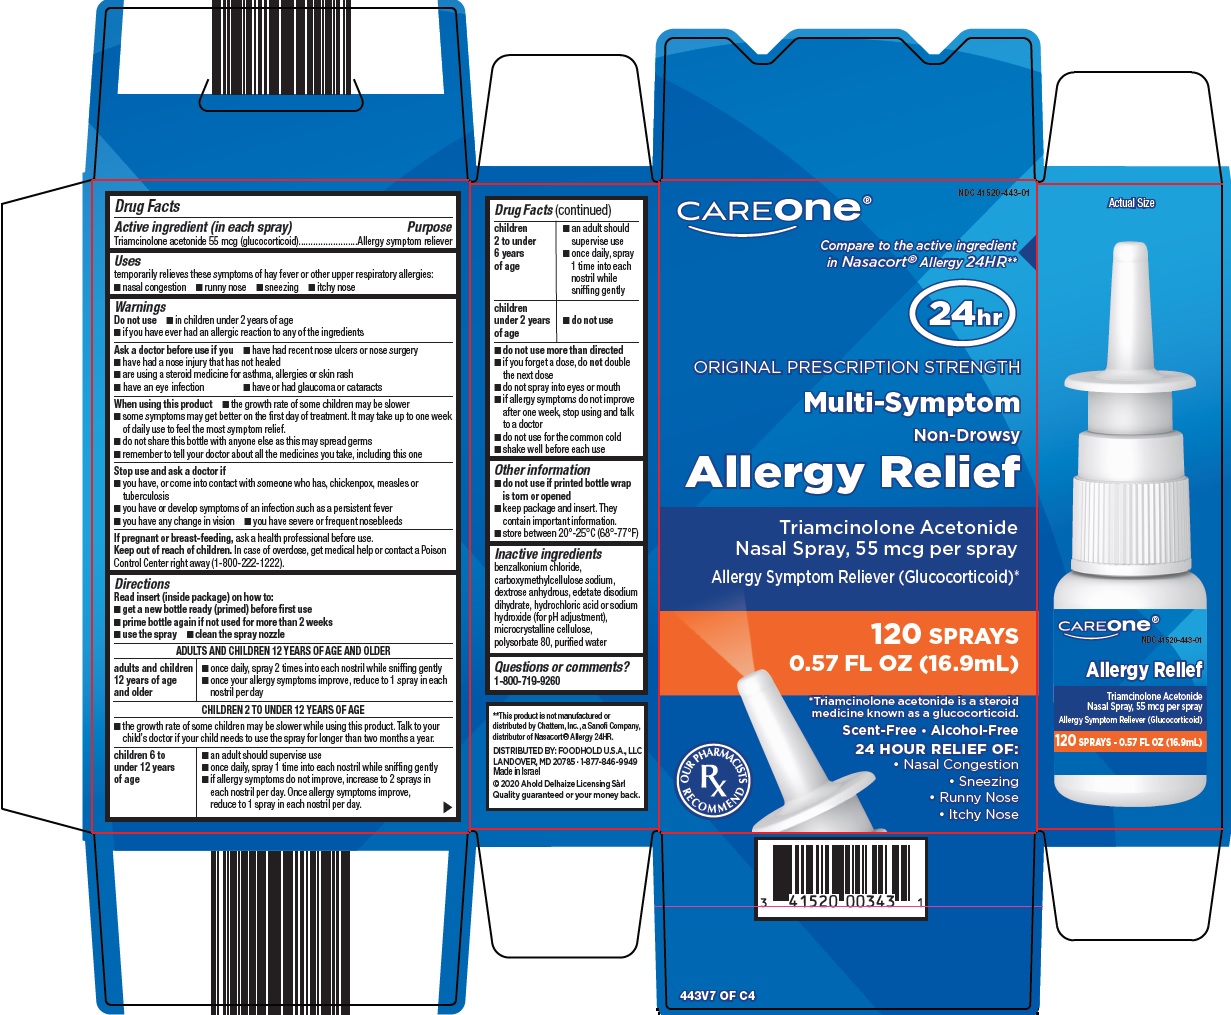 443OF-allergy-relief